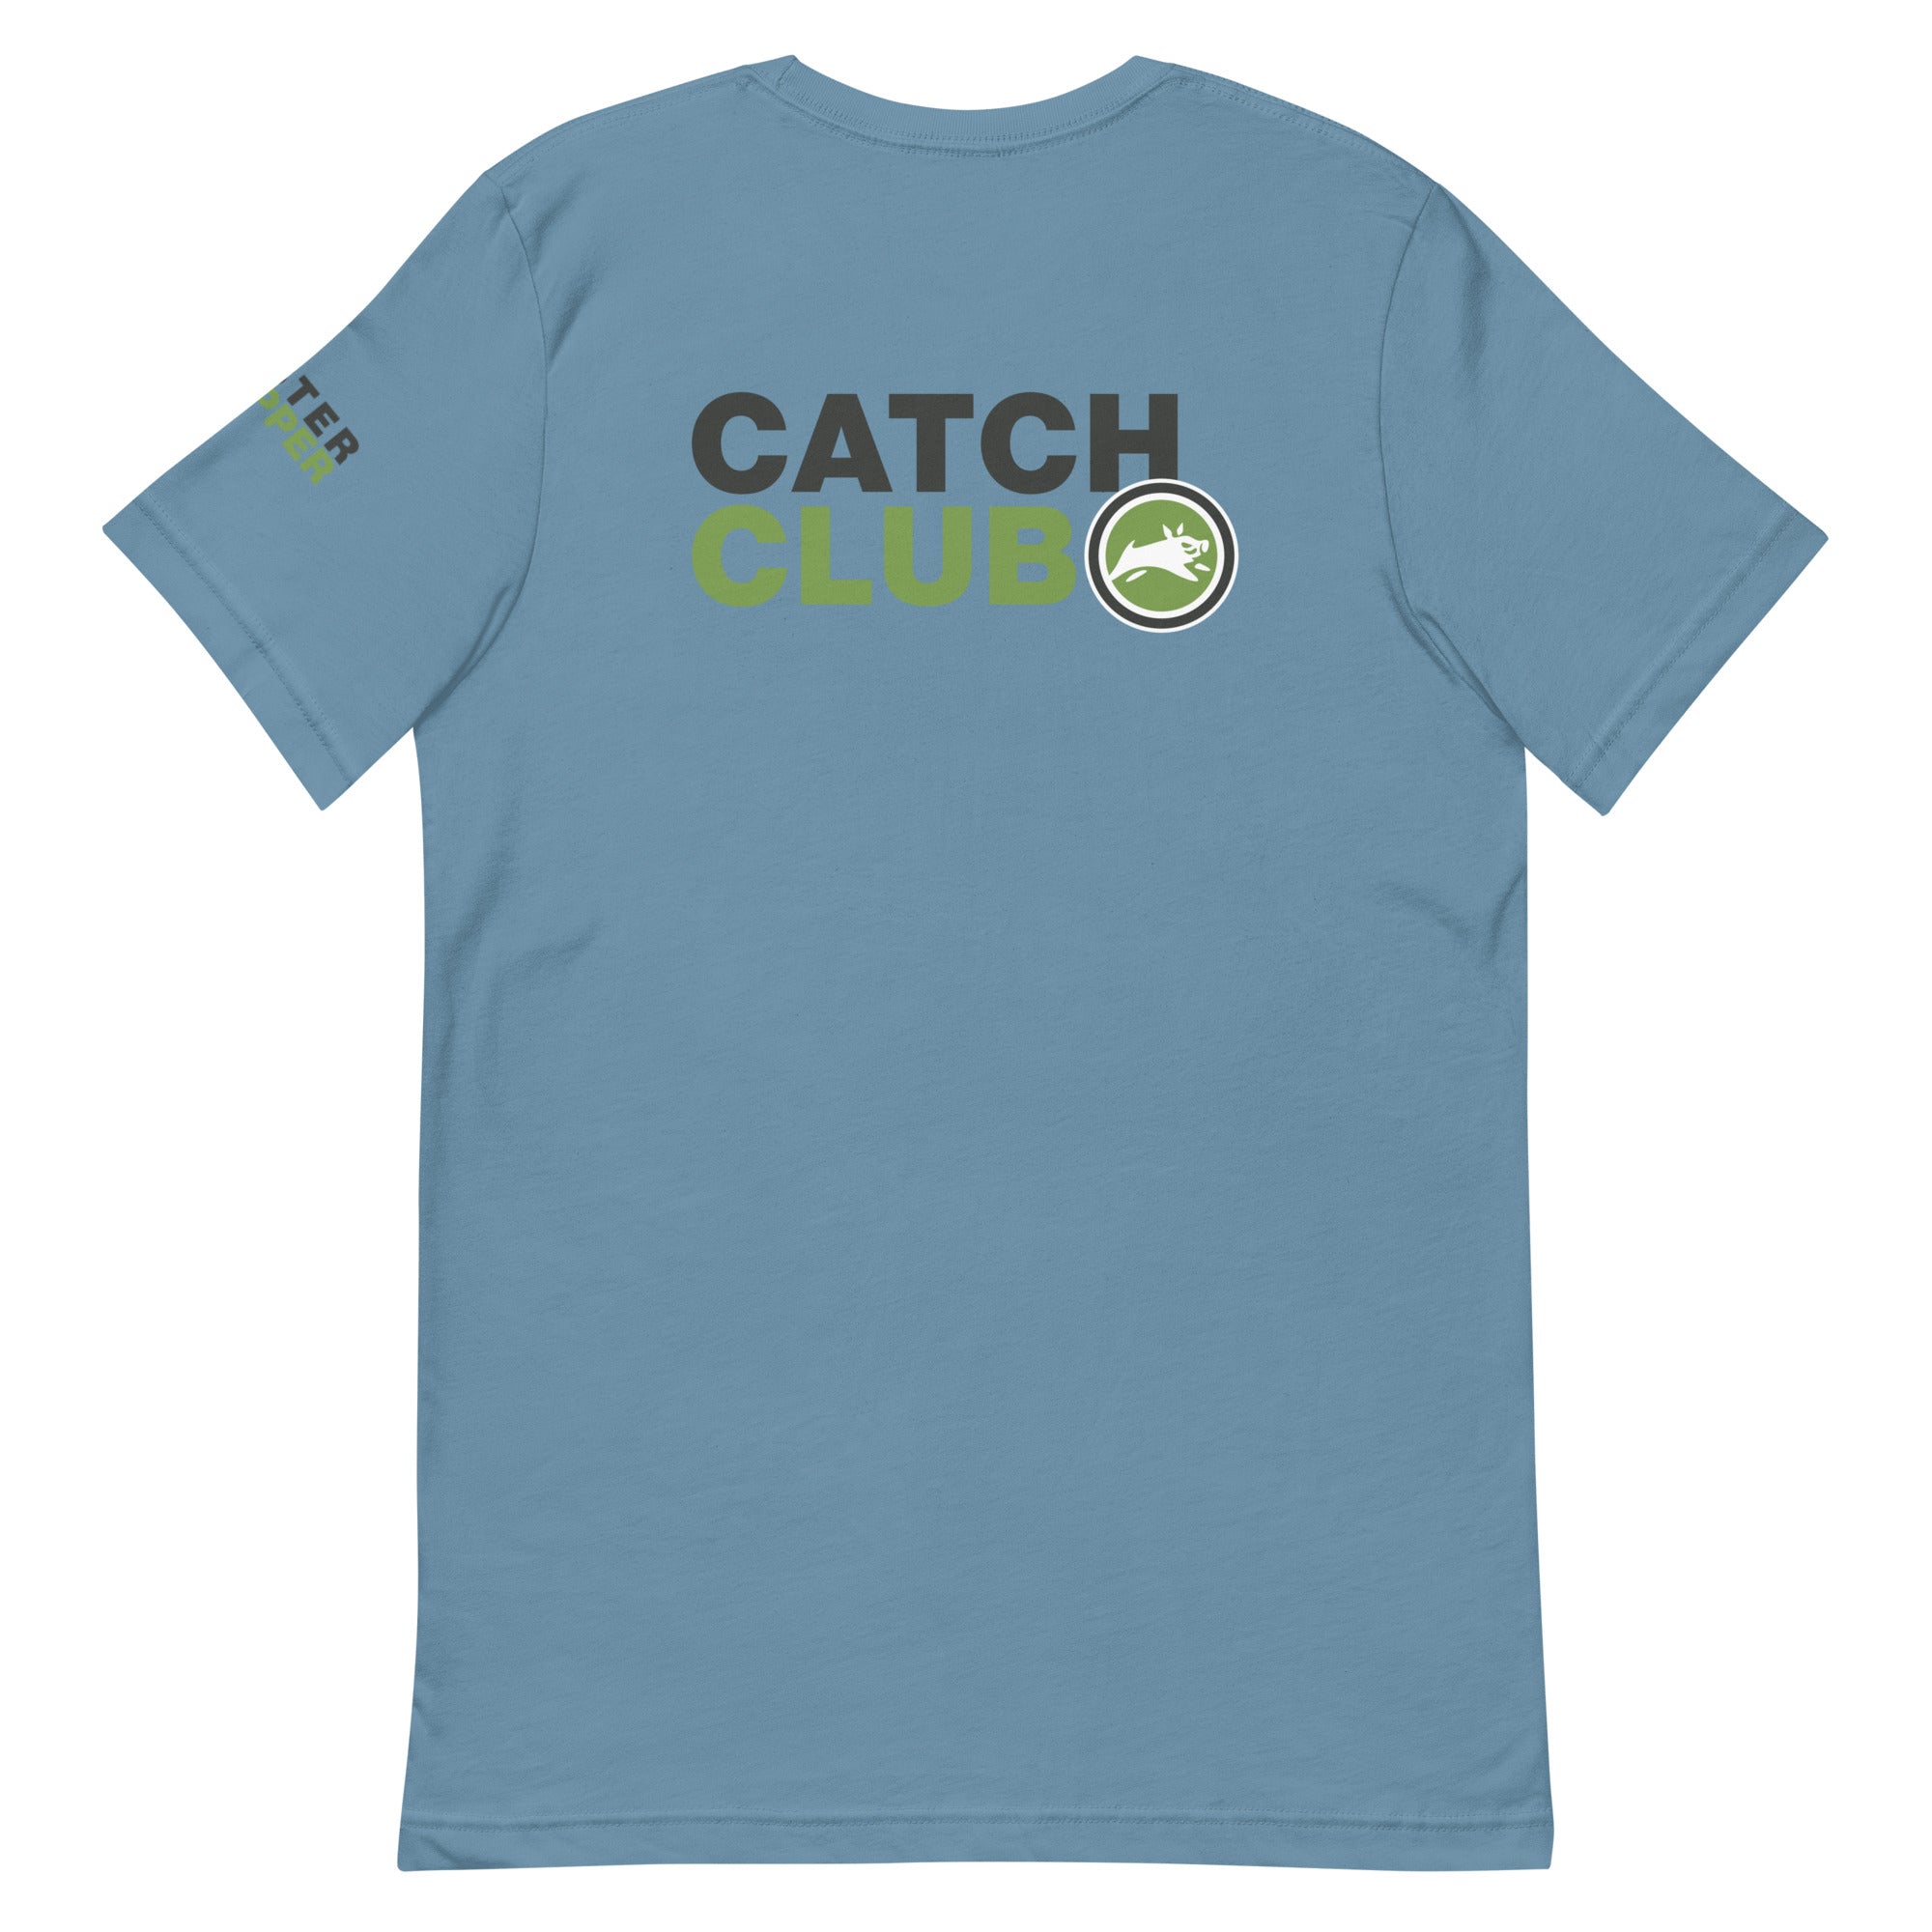 Catch Club Short-Sleeve Unisex T-Shirt